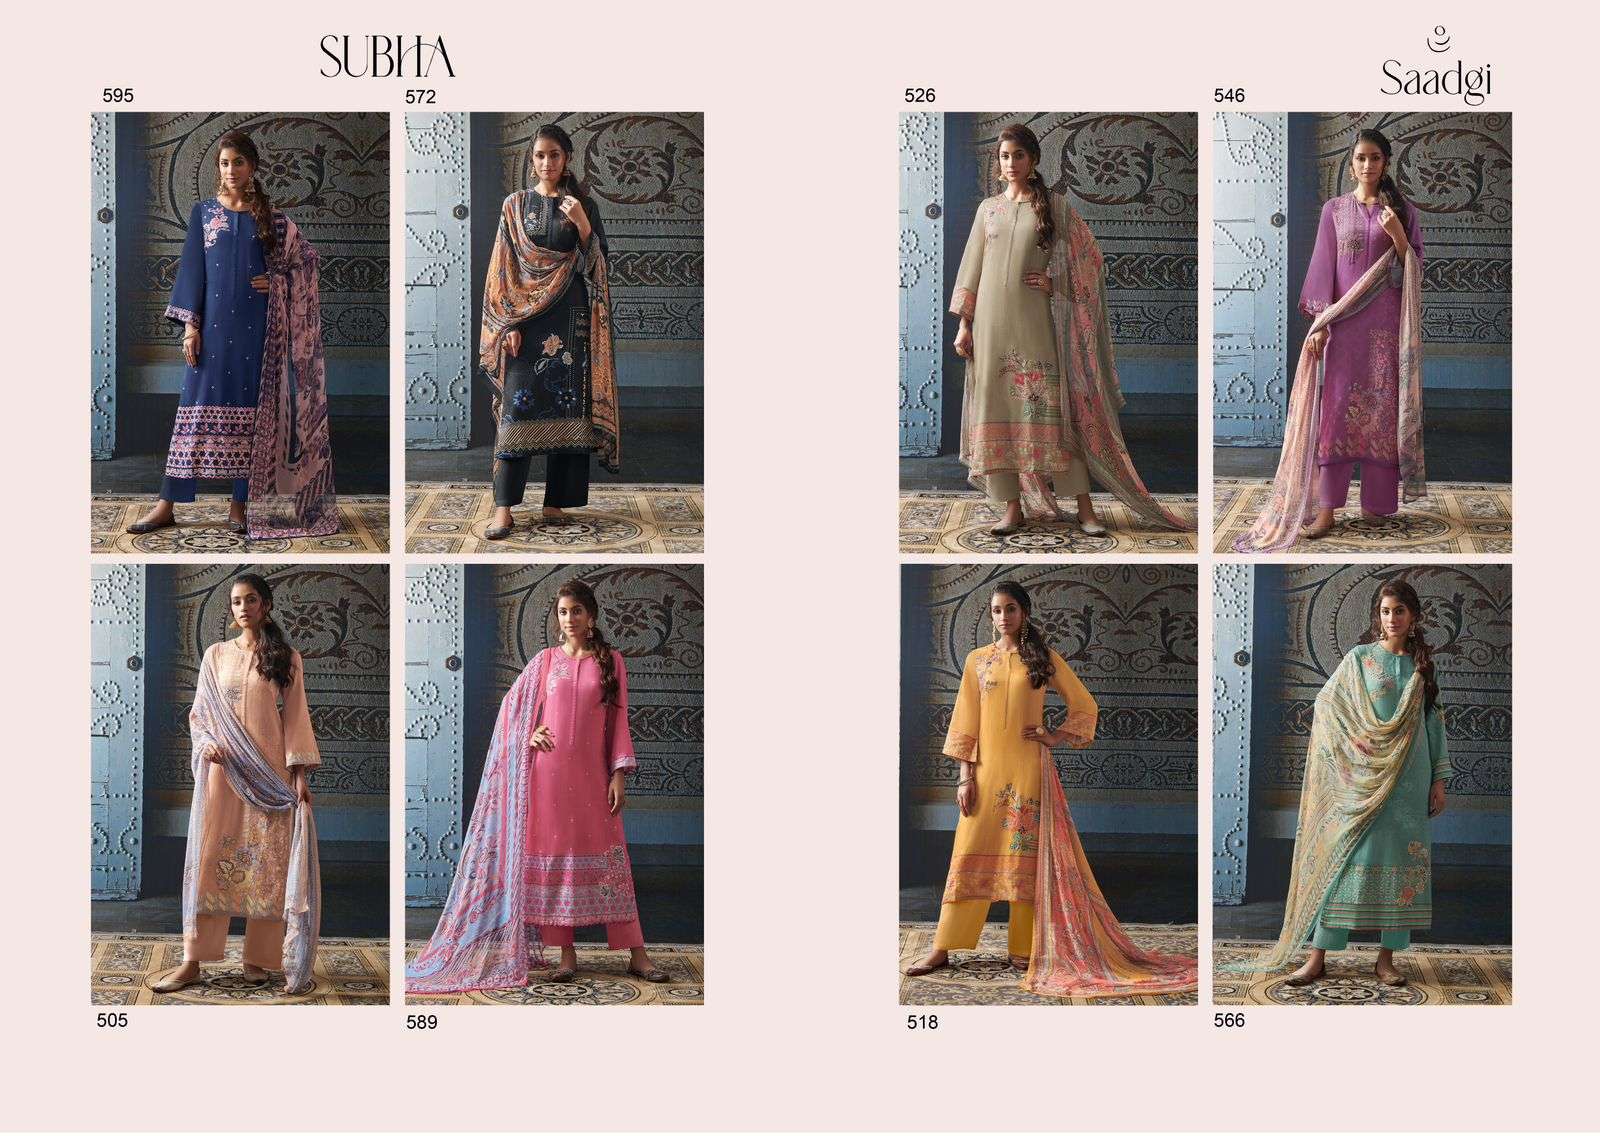 Saadgi Subha Jam Satin Digital Printed Salwar Suit 3 pic Set